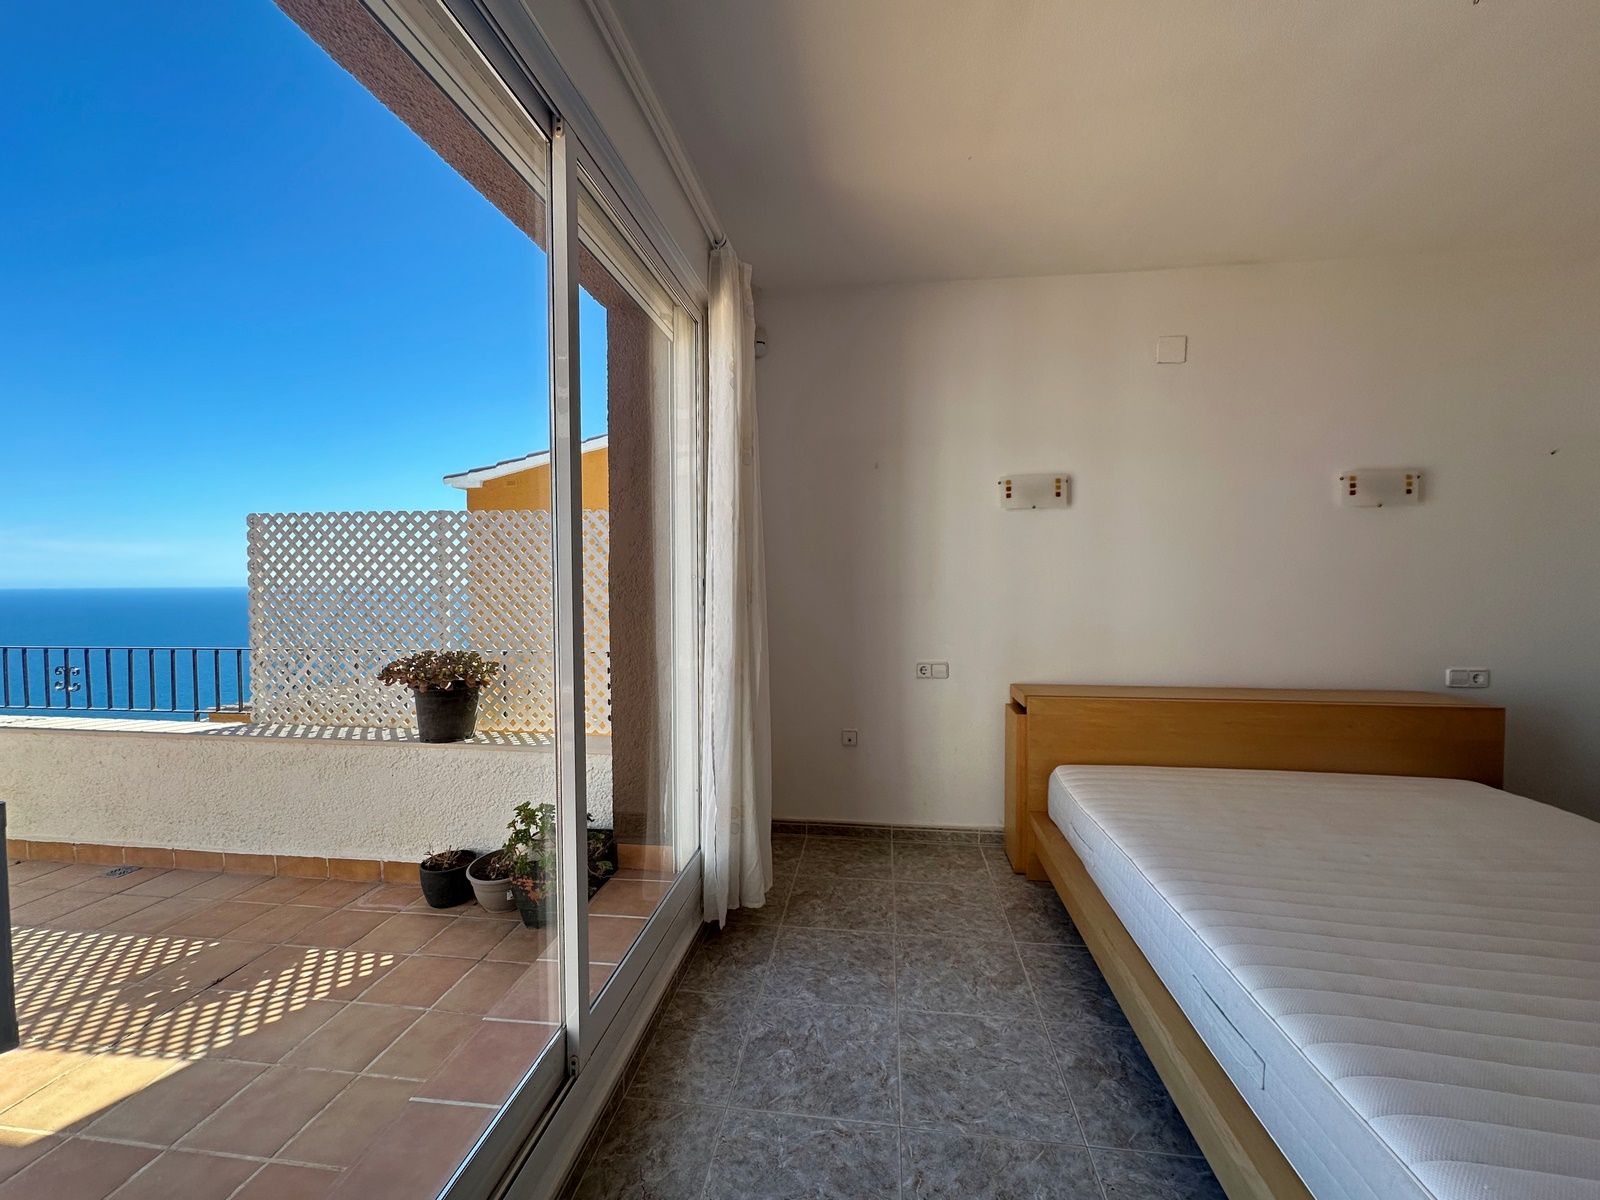 Penthouse zum Verkauf in Cumbre del Sol mit fantastischem Meerblick